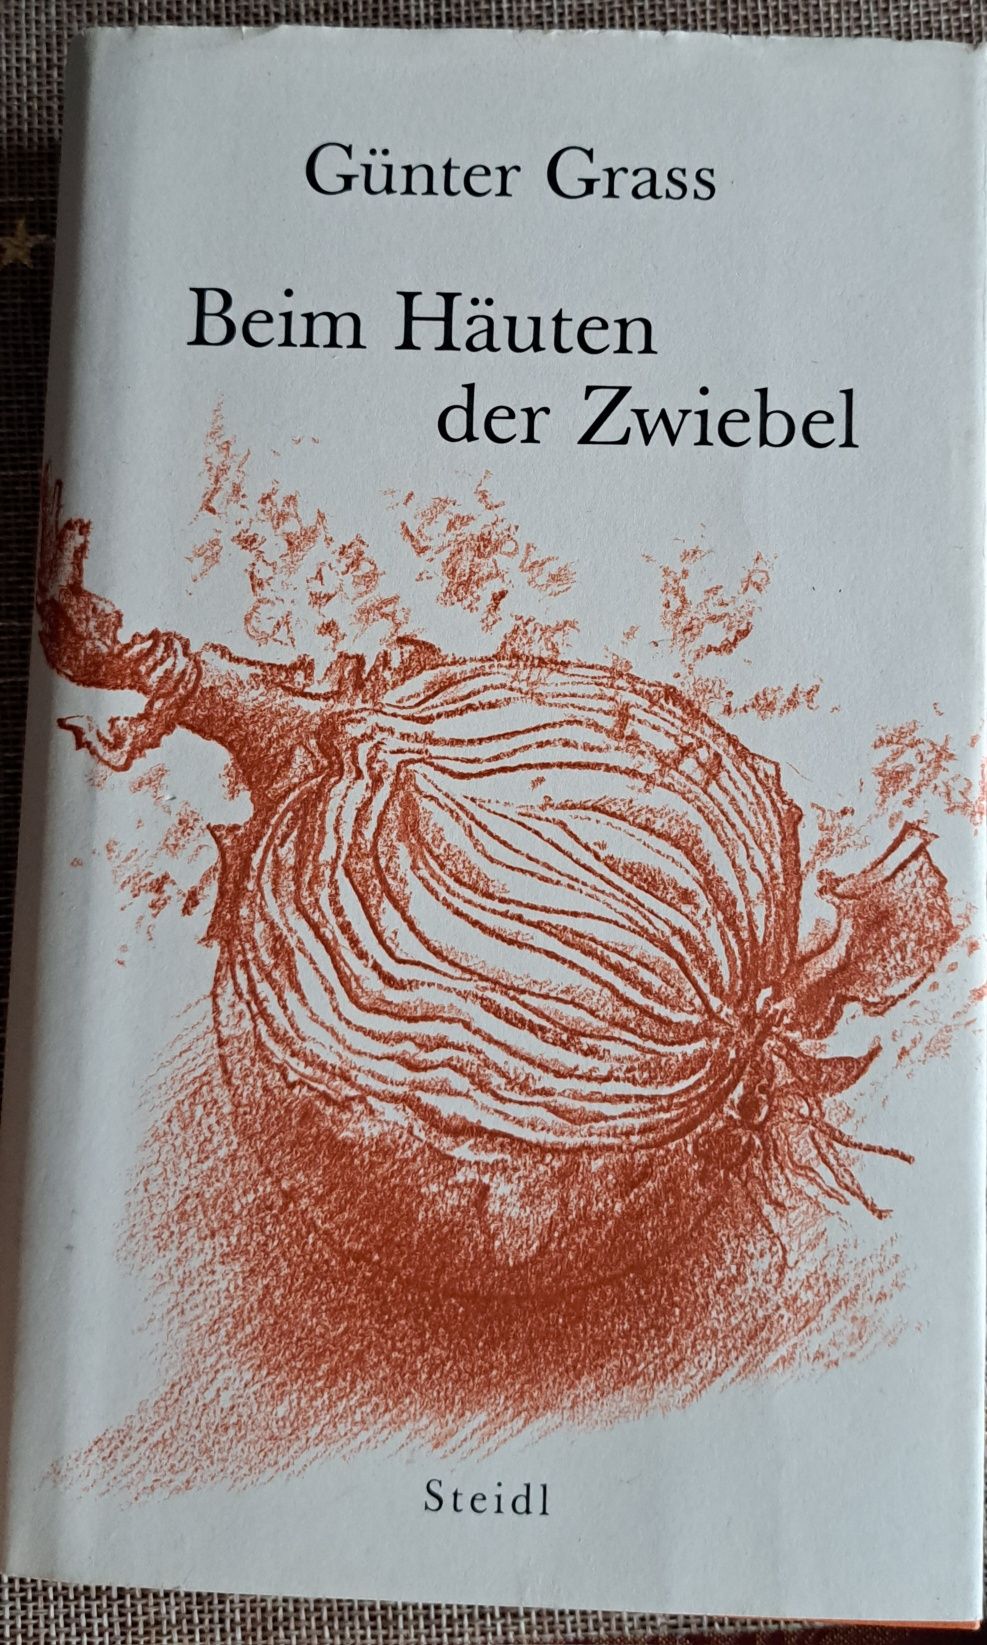 Bei Hauten der Zwiebel Gunter Grass książka po niemiecku